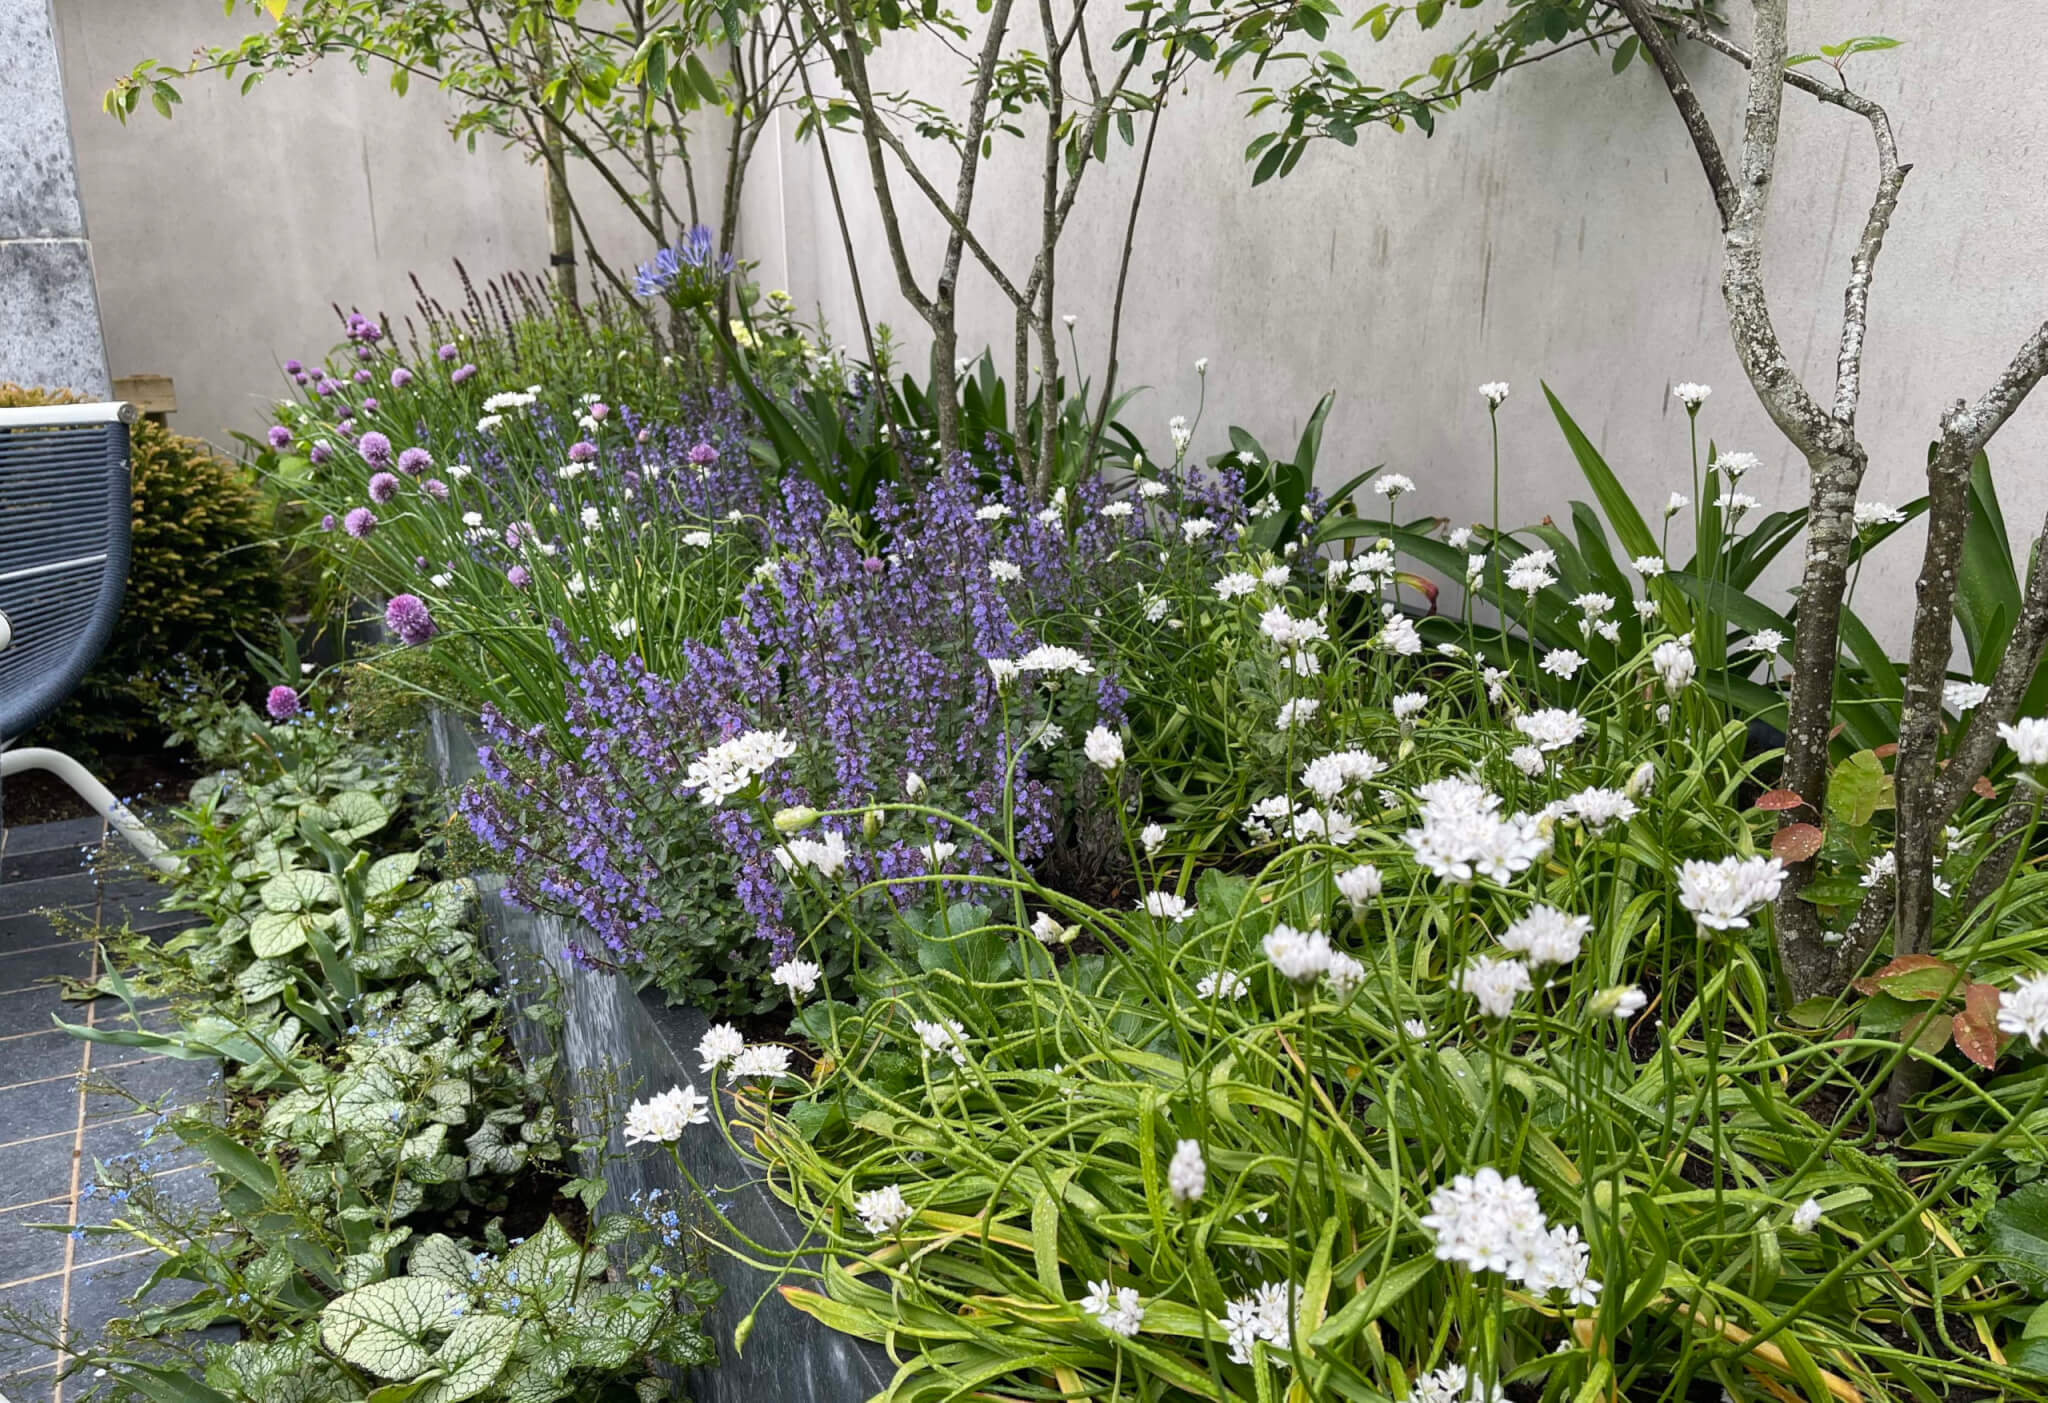 Cork landscaper wins international prize for urban garden